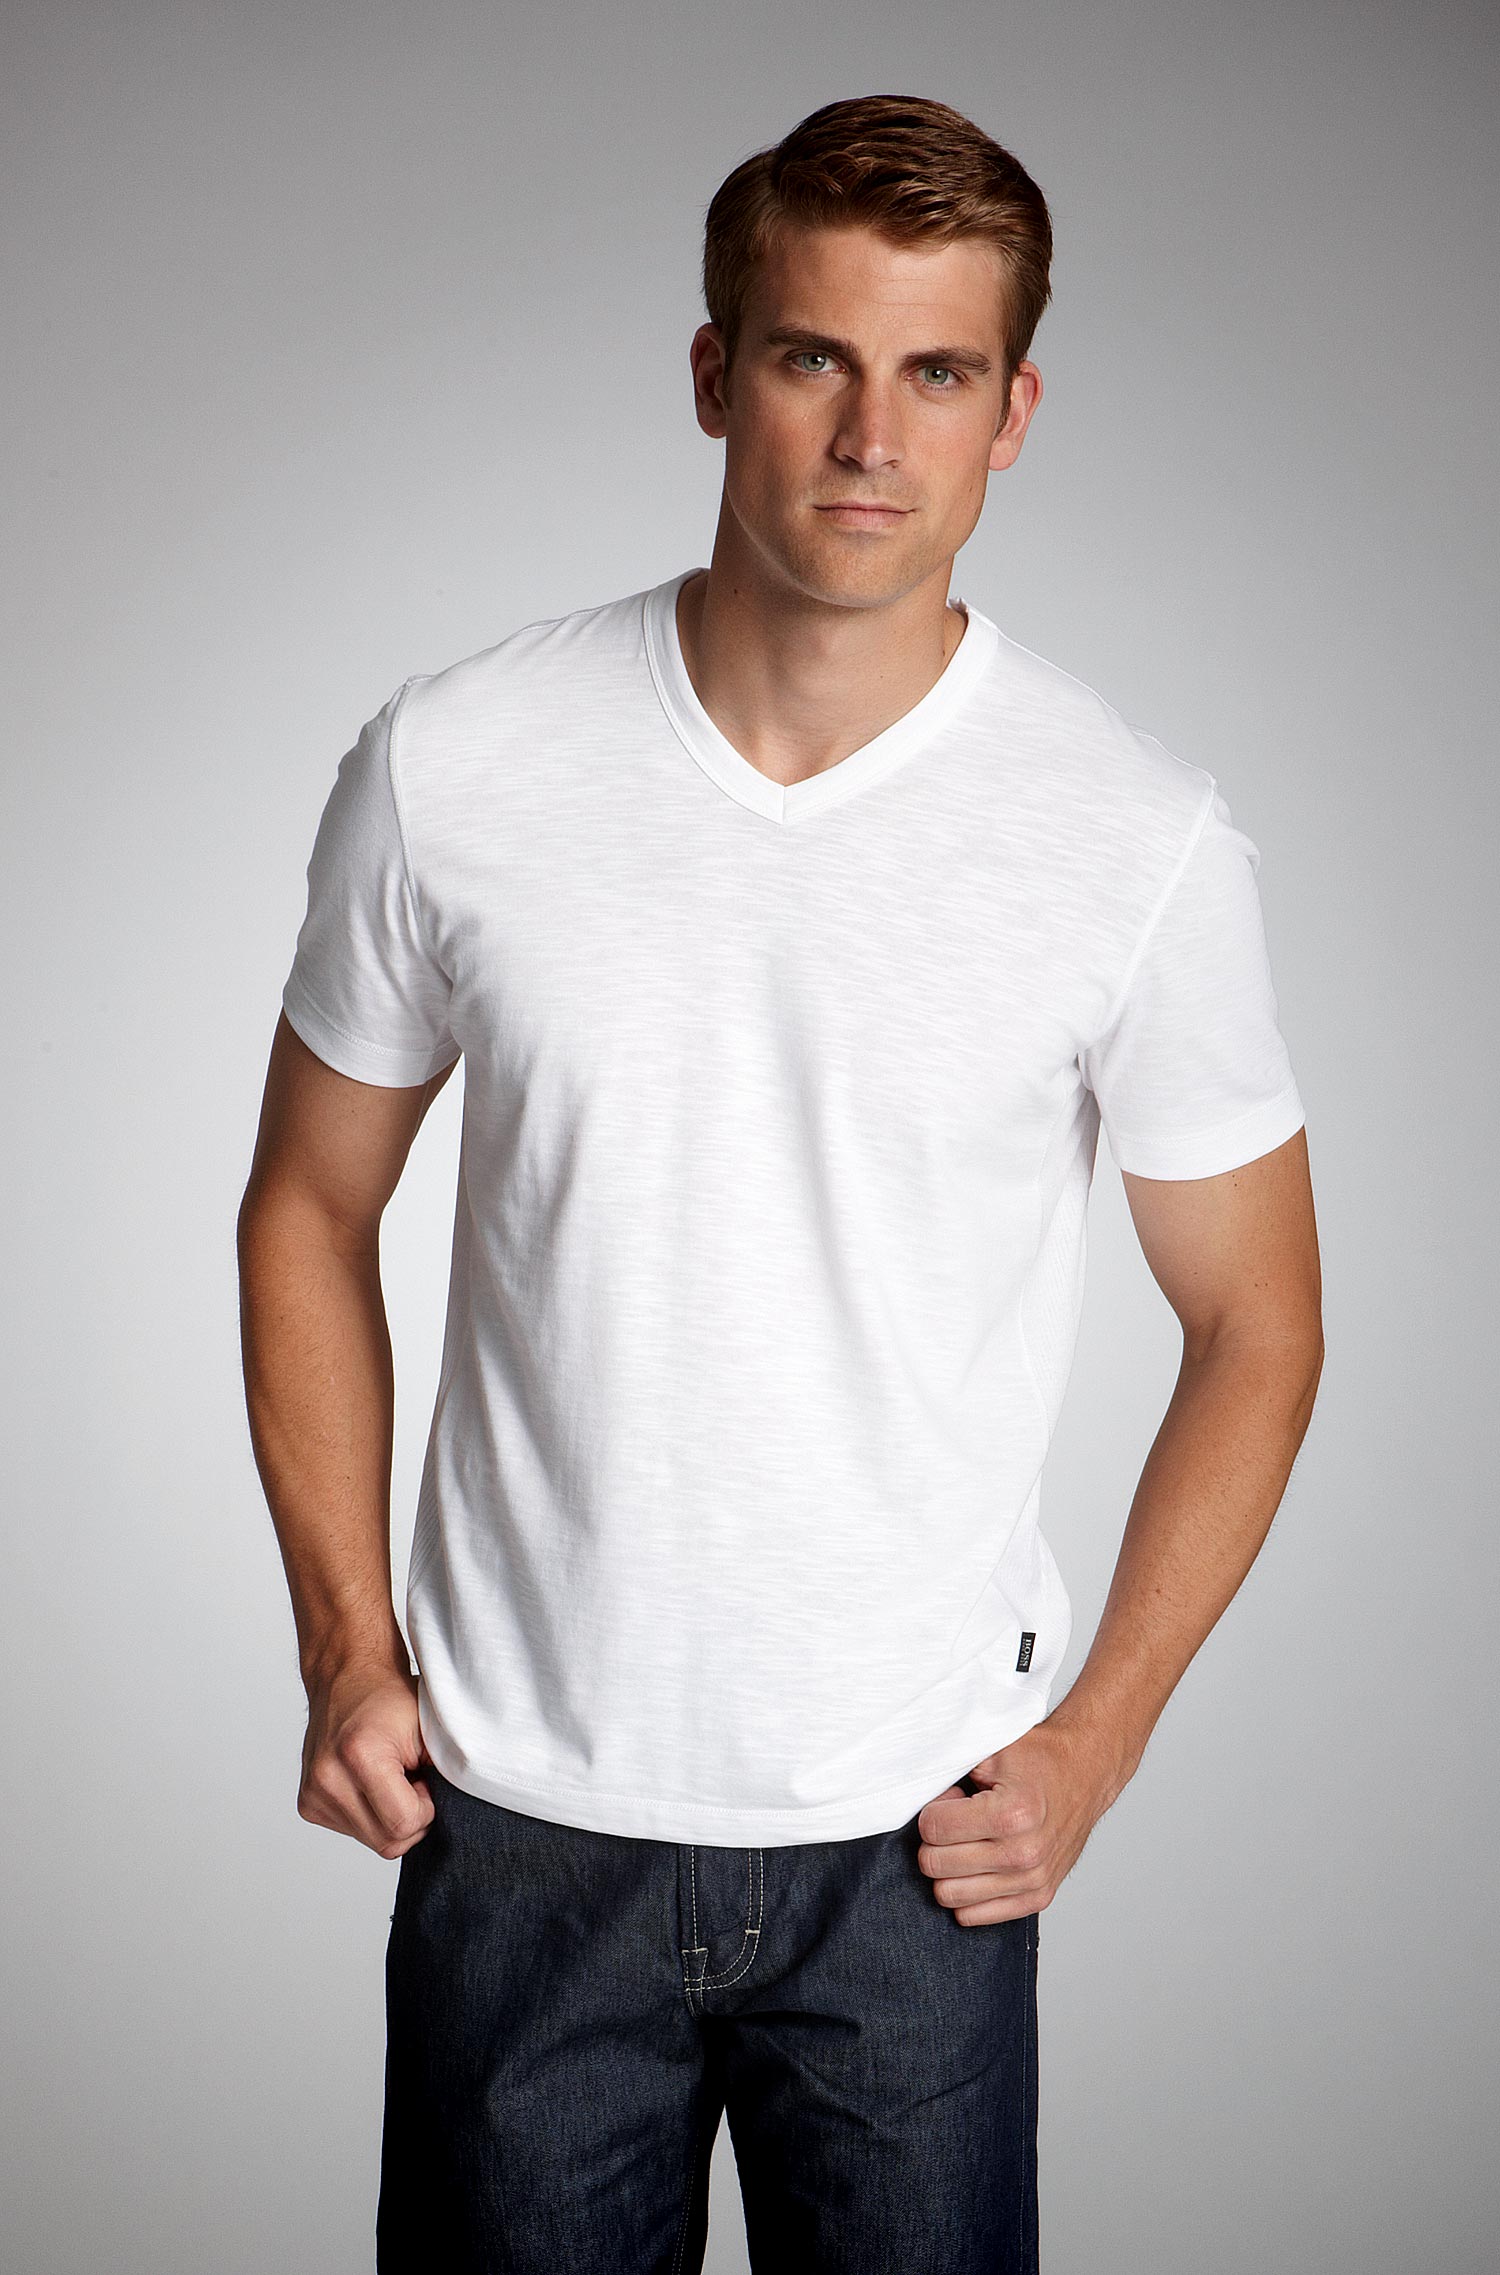 Мужчина 5 м. Футболка мужчина. Парень в белой футболке. Модели футболок мужских. Мужчина модель в футболке.